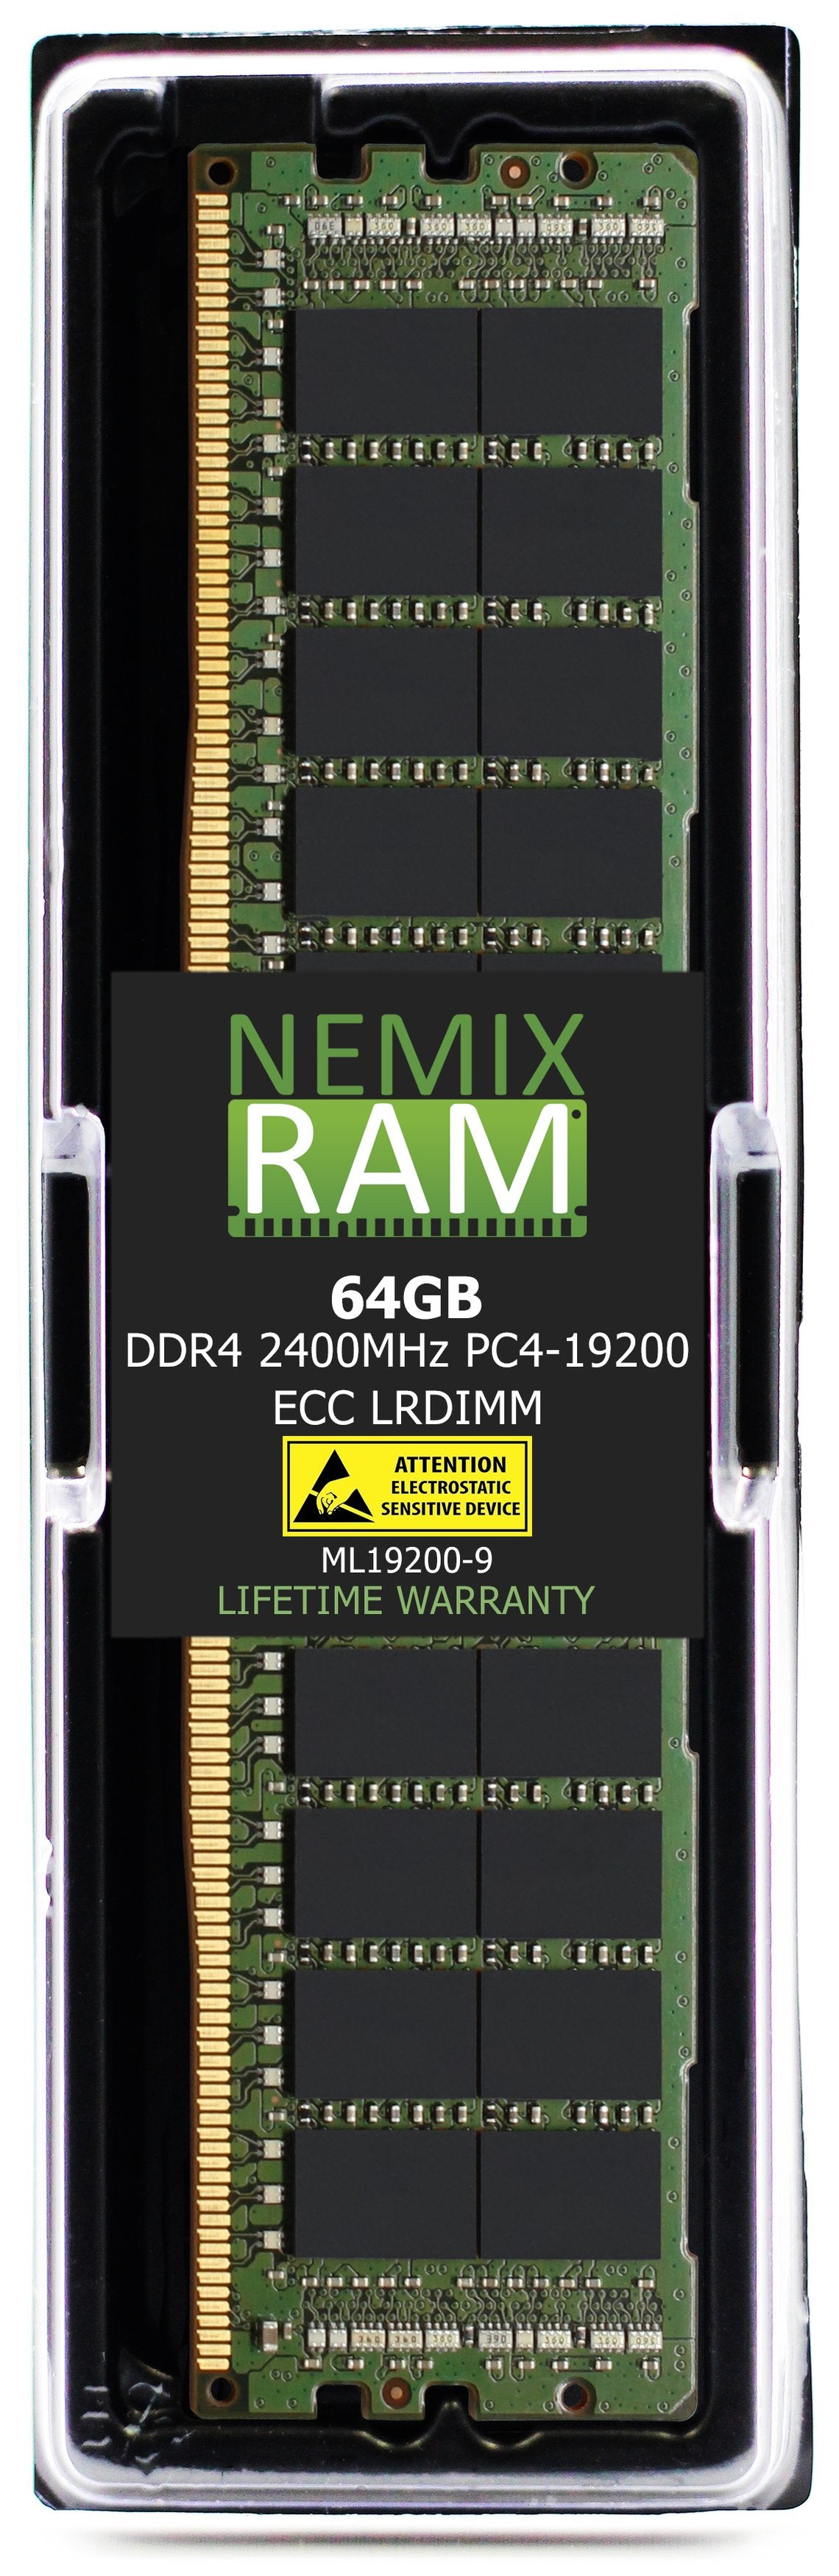 Hynix HMAA8GL7MMR4N-UH 64GB DDR4 2400MHZ PC4-19200 LRDIMM Compatible Memory Module